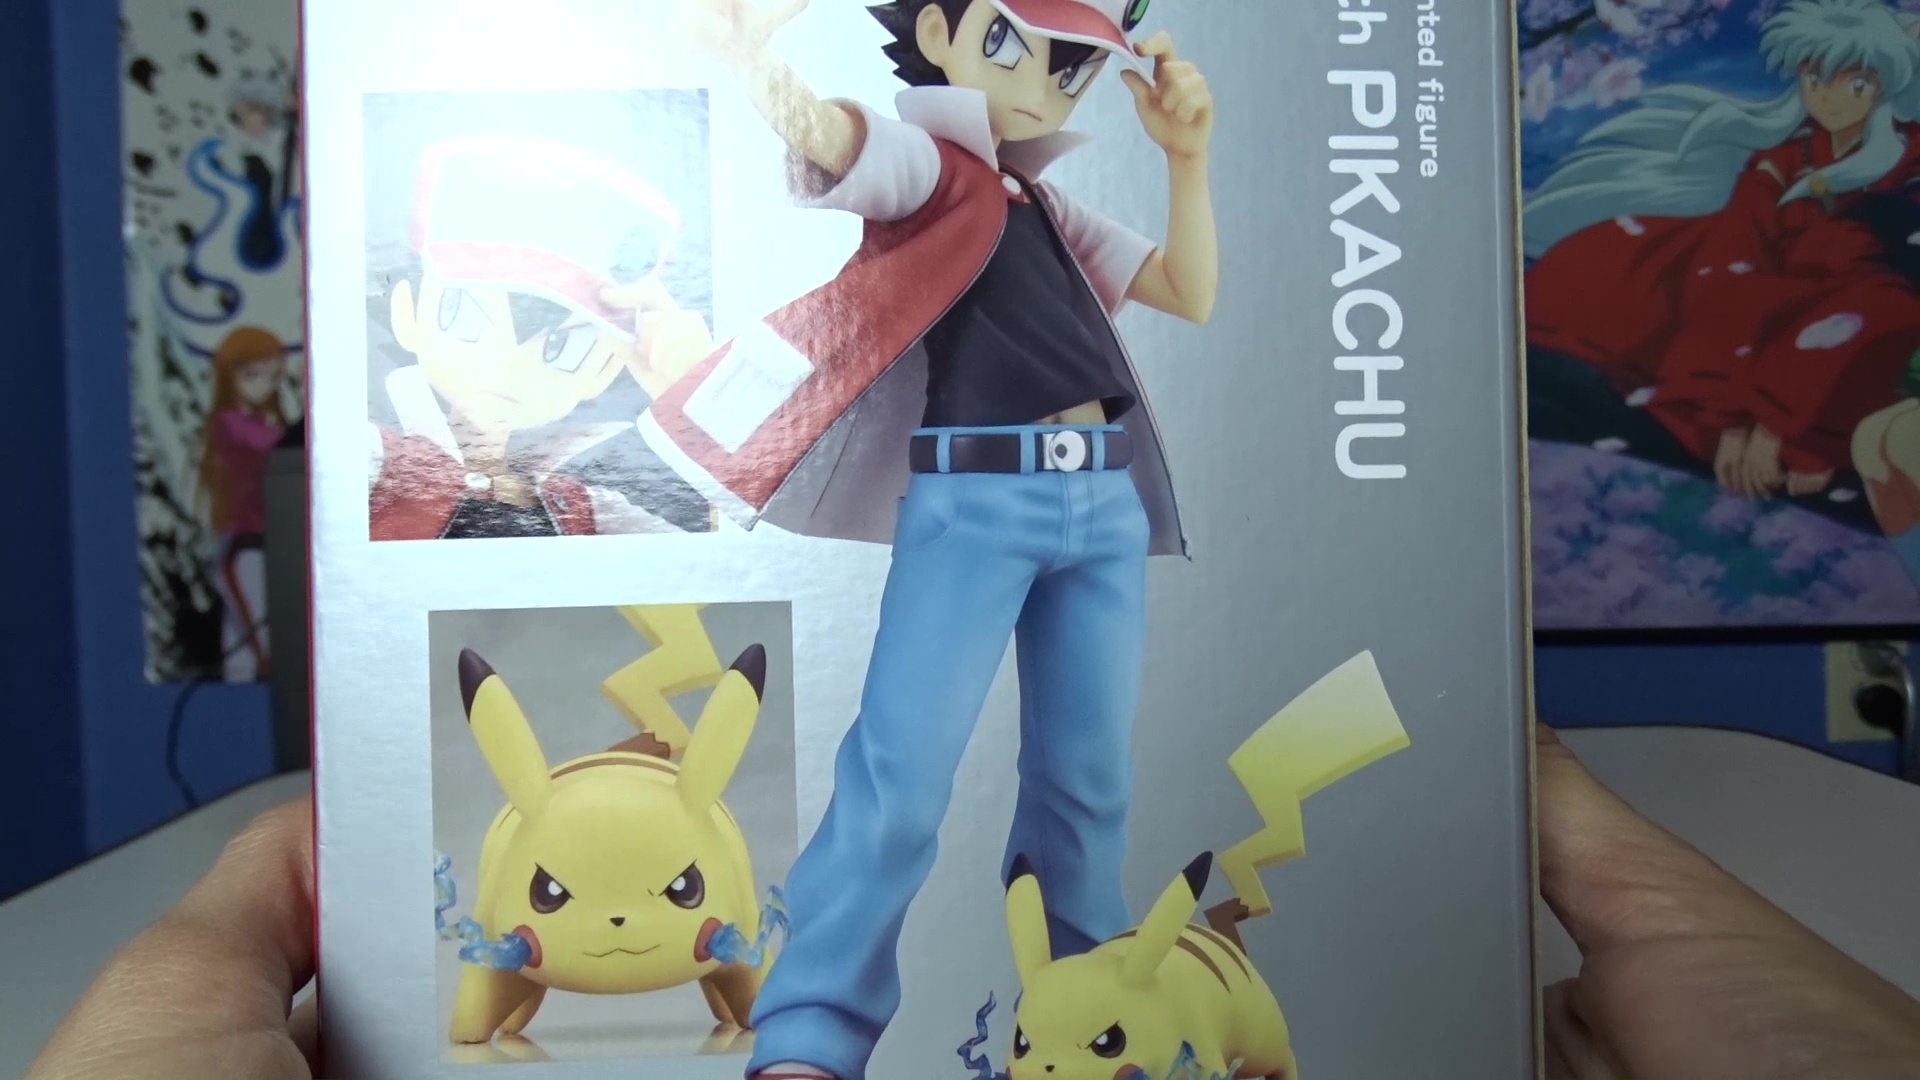 Legendary Pokémon Trainer Red Is First Up in Kotobukiya's Series of Pokémon  Figures!, Press Release News